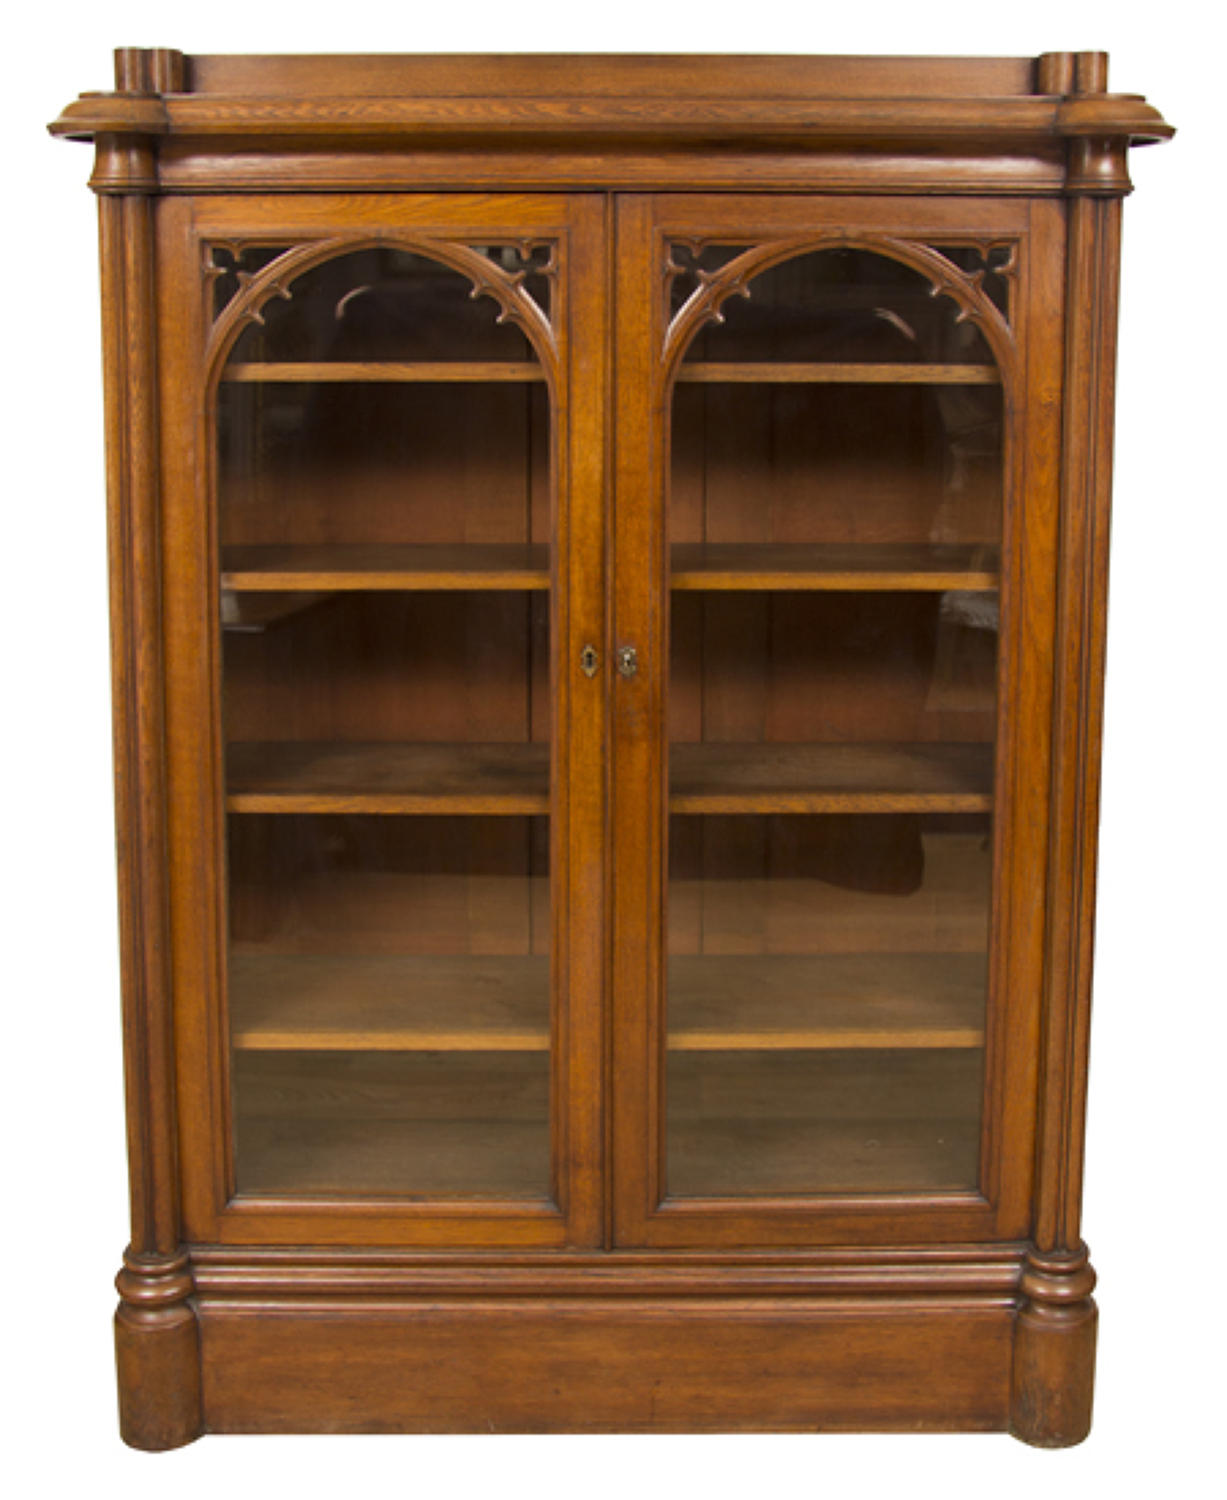 A Gothic Oak Bookcase in the Pugin style